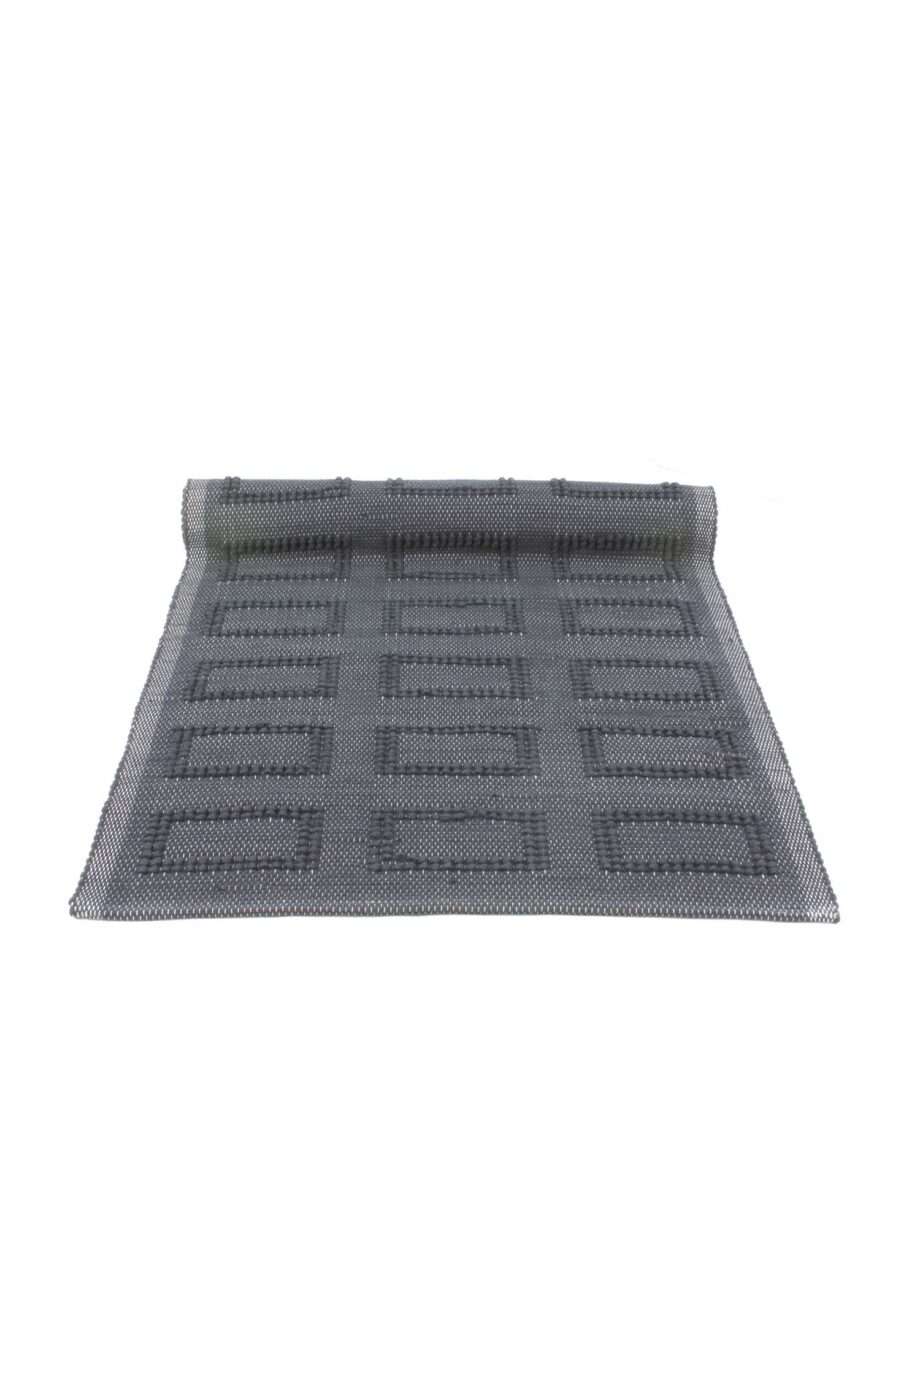 quadro anthracite woven cotton floor mat small